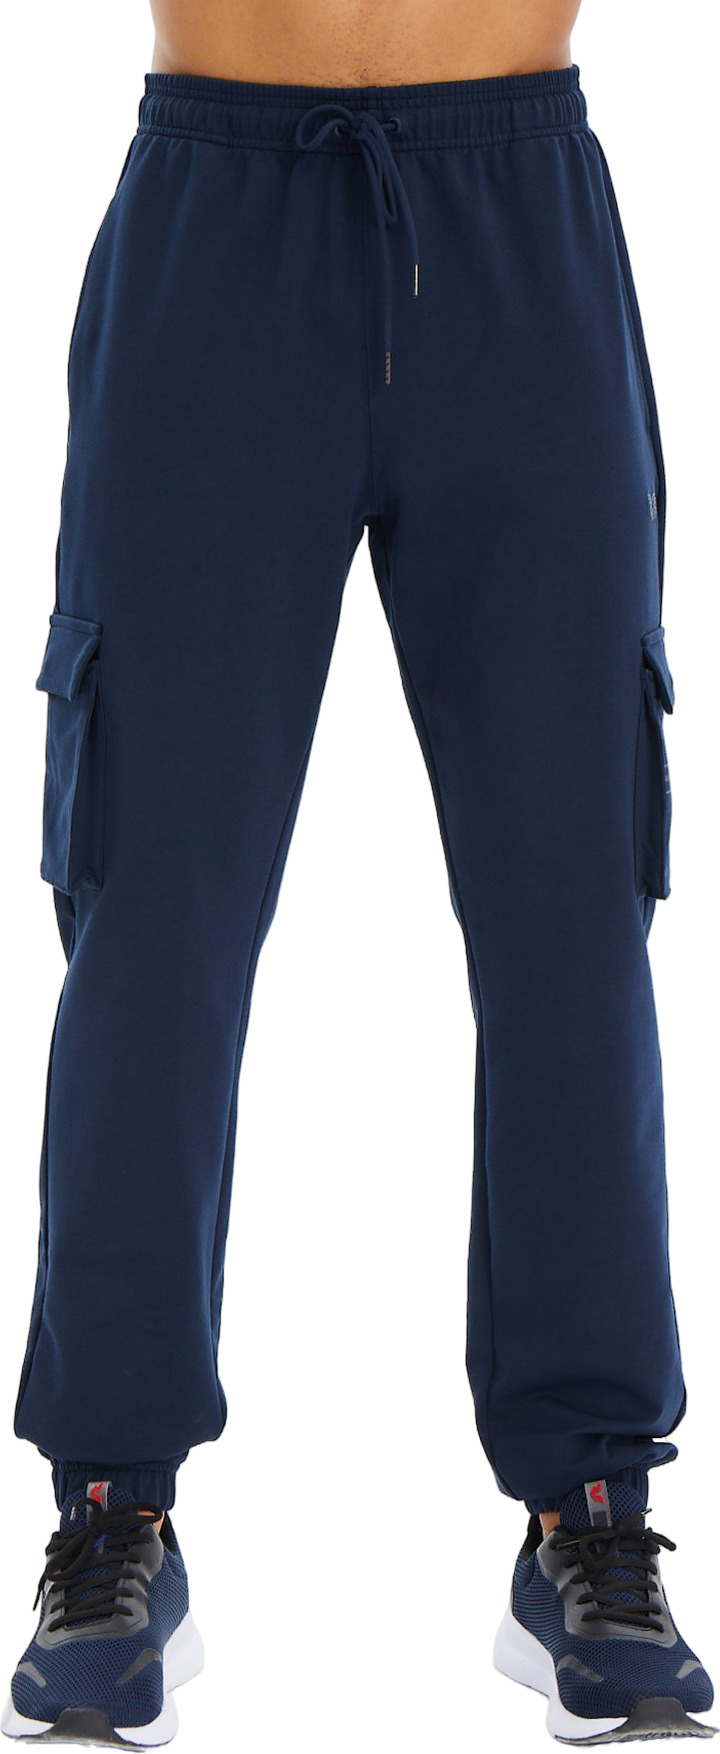 Спортивные брюки мужские Bilcee Men's Sweatpants синие L